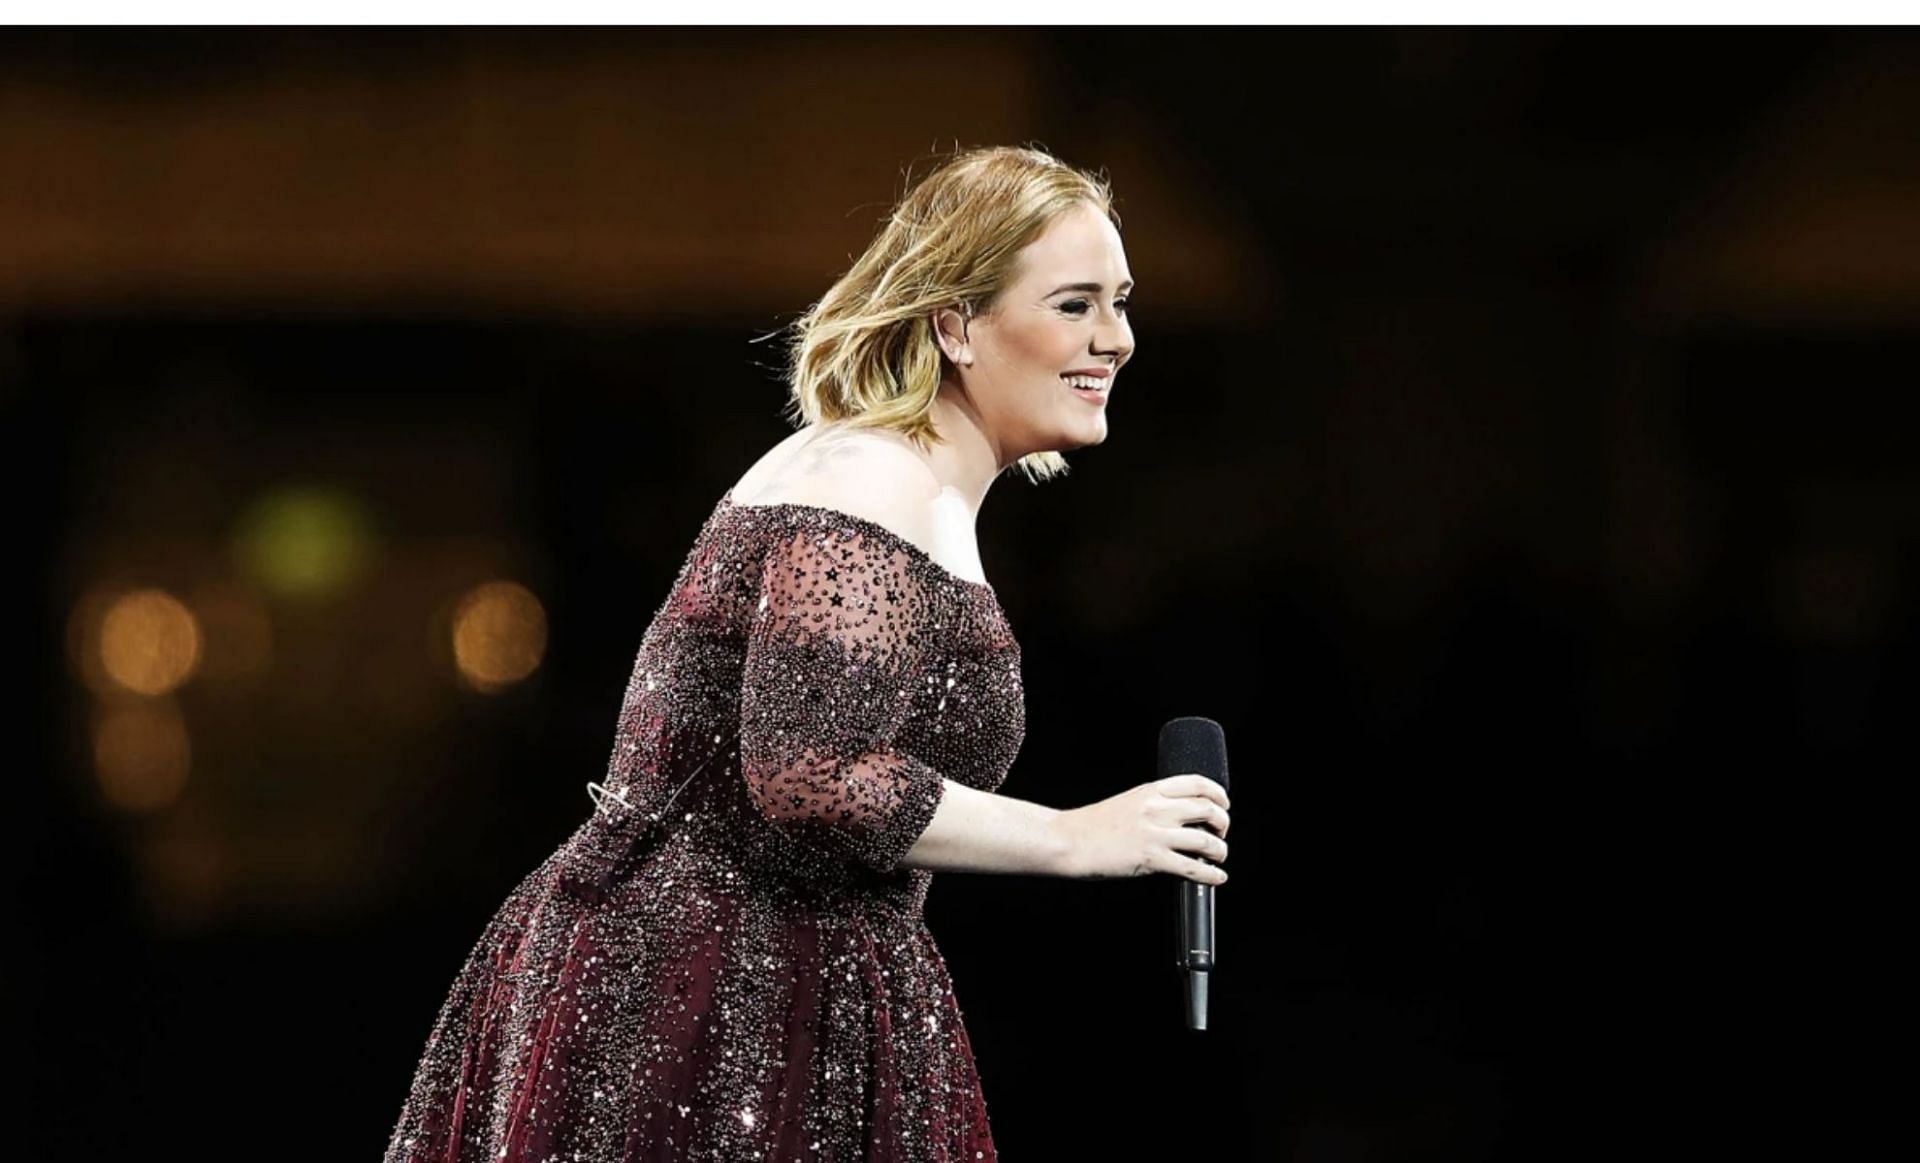 Adele during her performance (Image via complex.com)